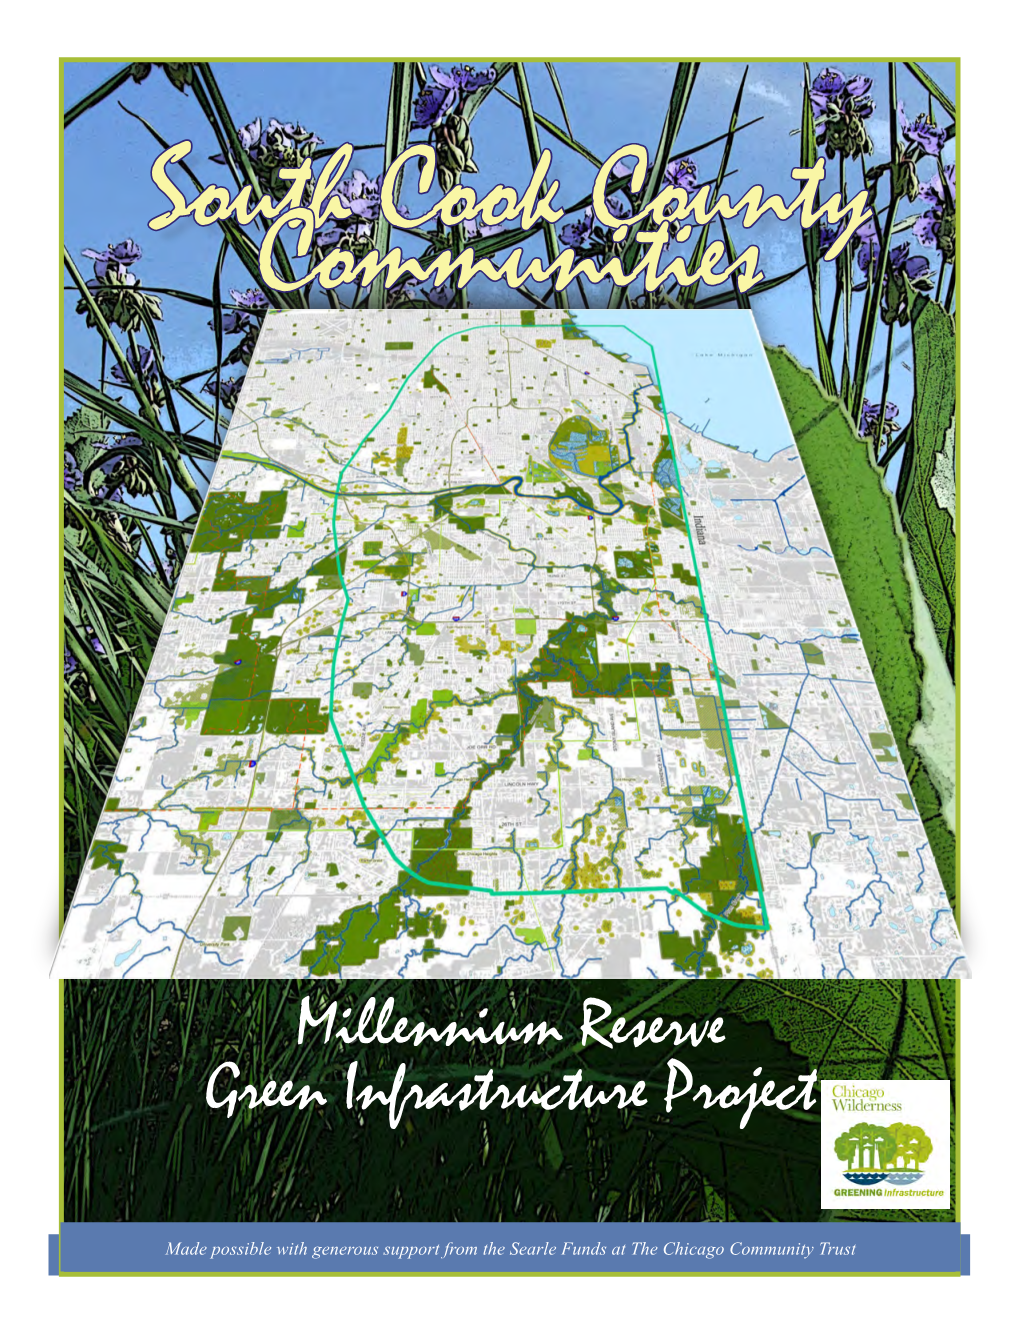 Millennium Reserve Green Infrastructure Project